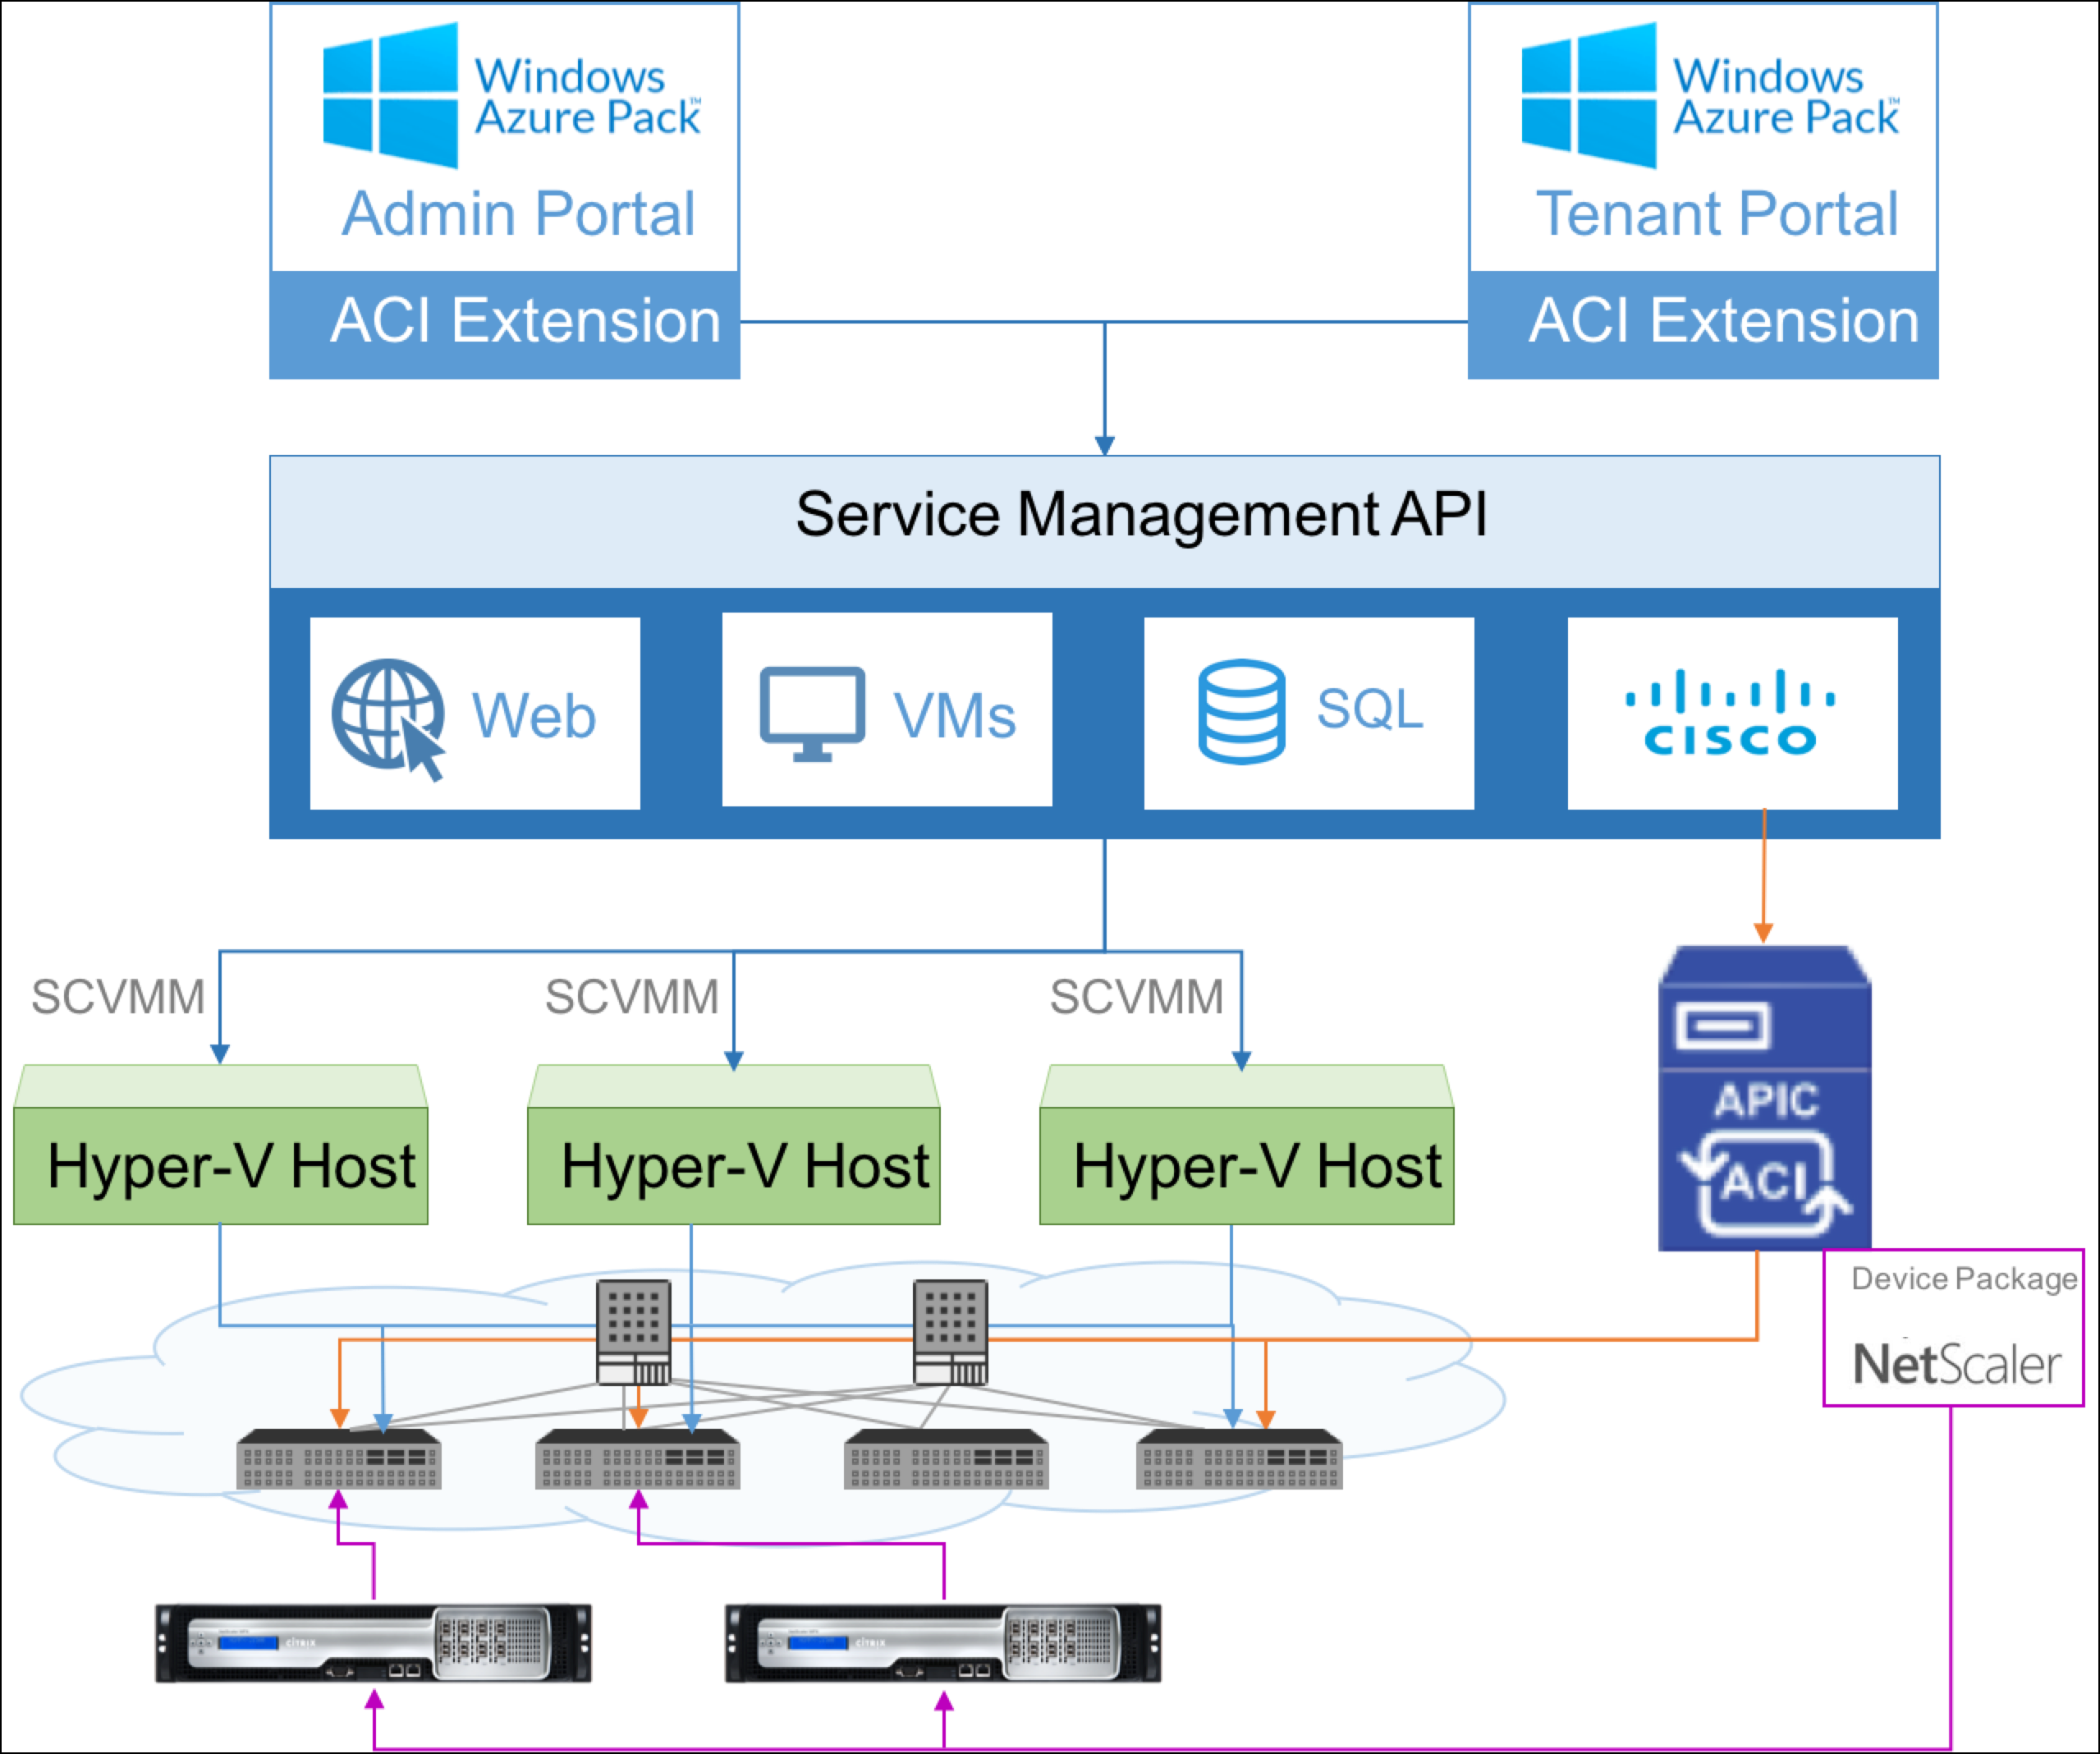 NetScaler 专用云 Microsoft Azure Cisco ACI